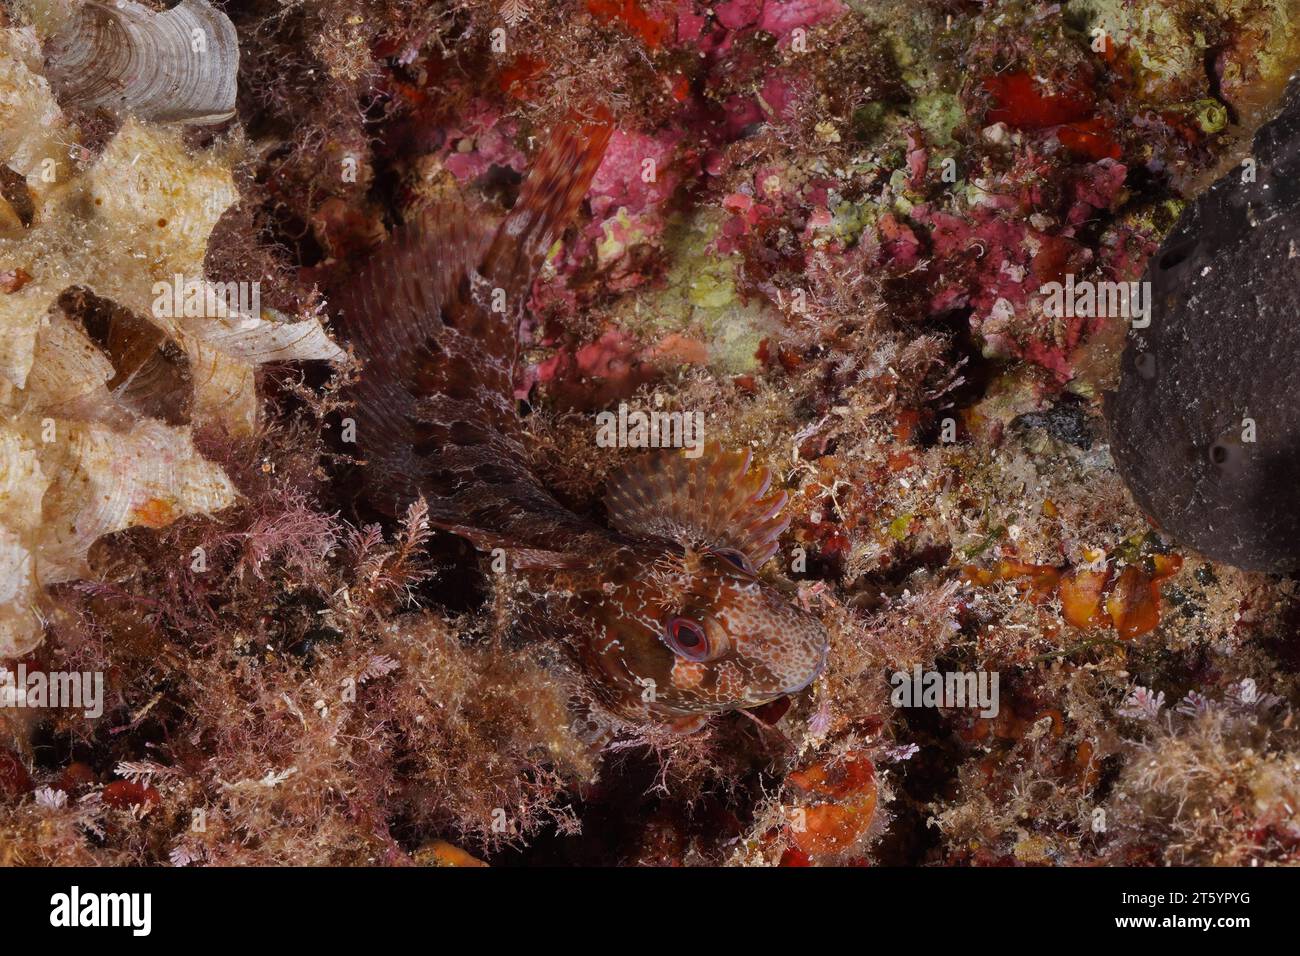 Well camouflaged tompot blenny (Parablennius gattorugine) in the Mediterranean Sea near Hyeres. Dive site Giens Peninsula, Cote dAzur, France Stock Photo